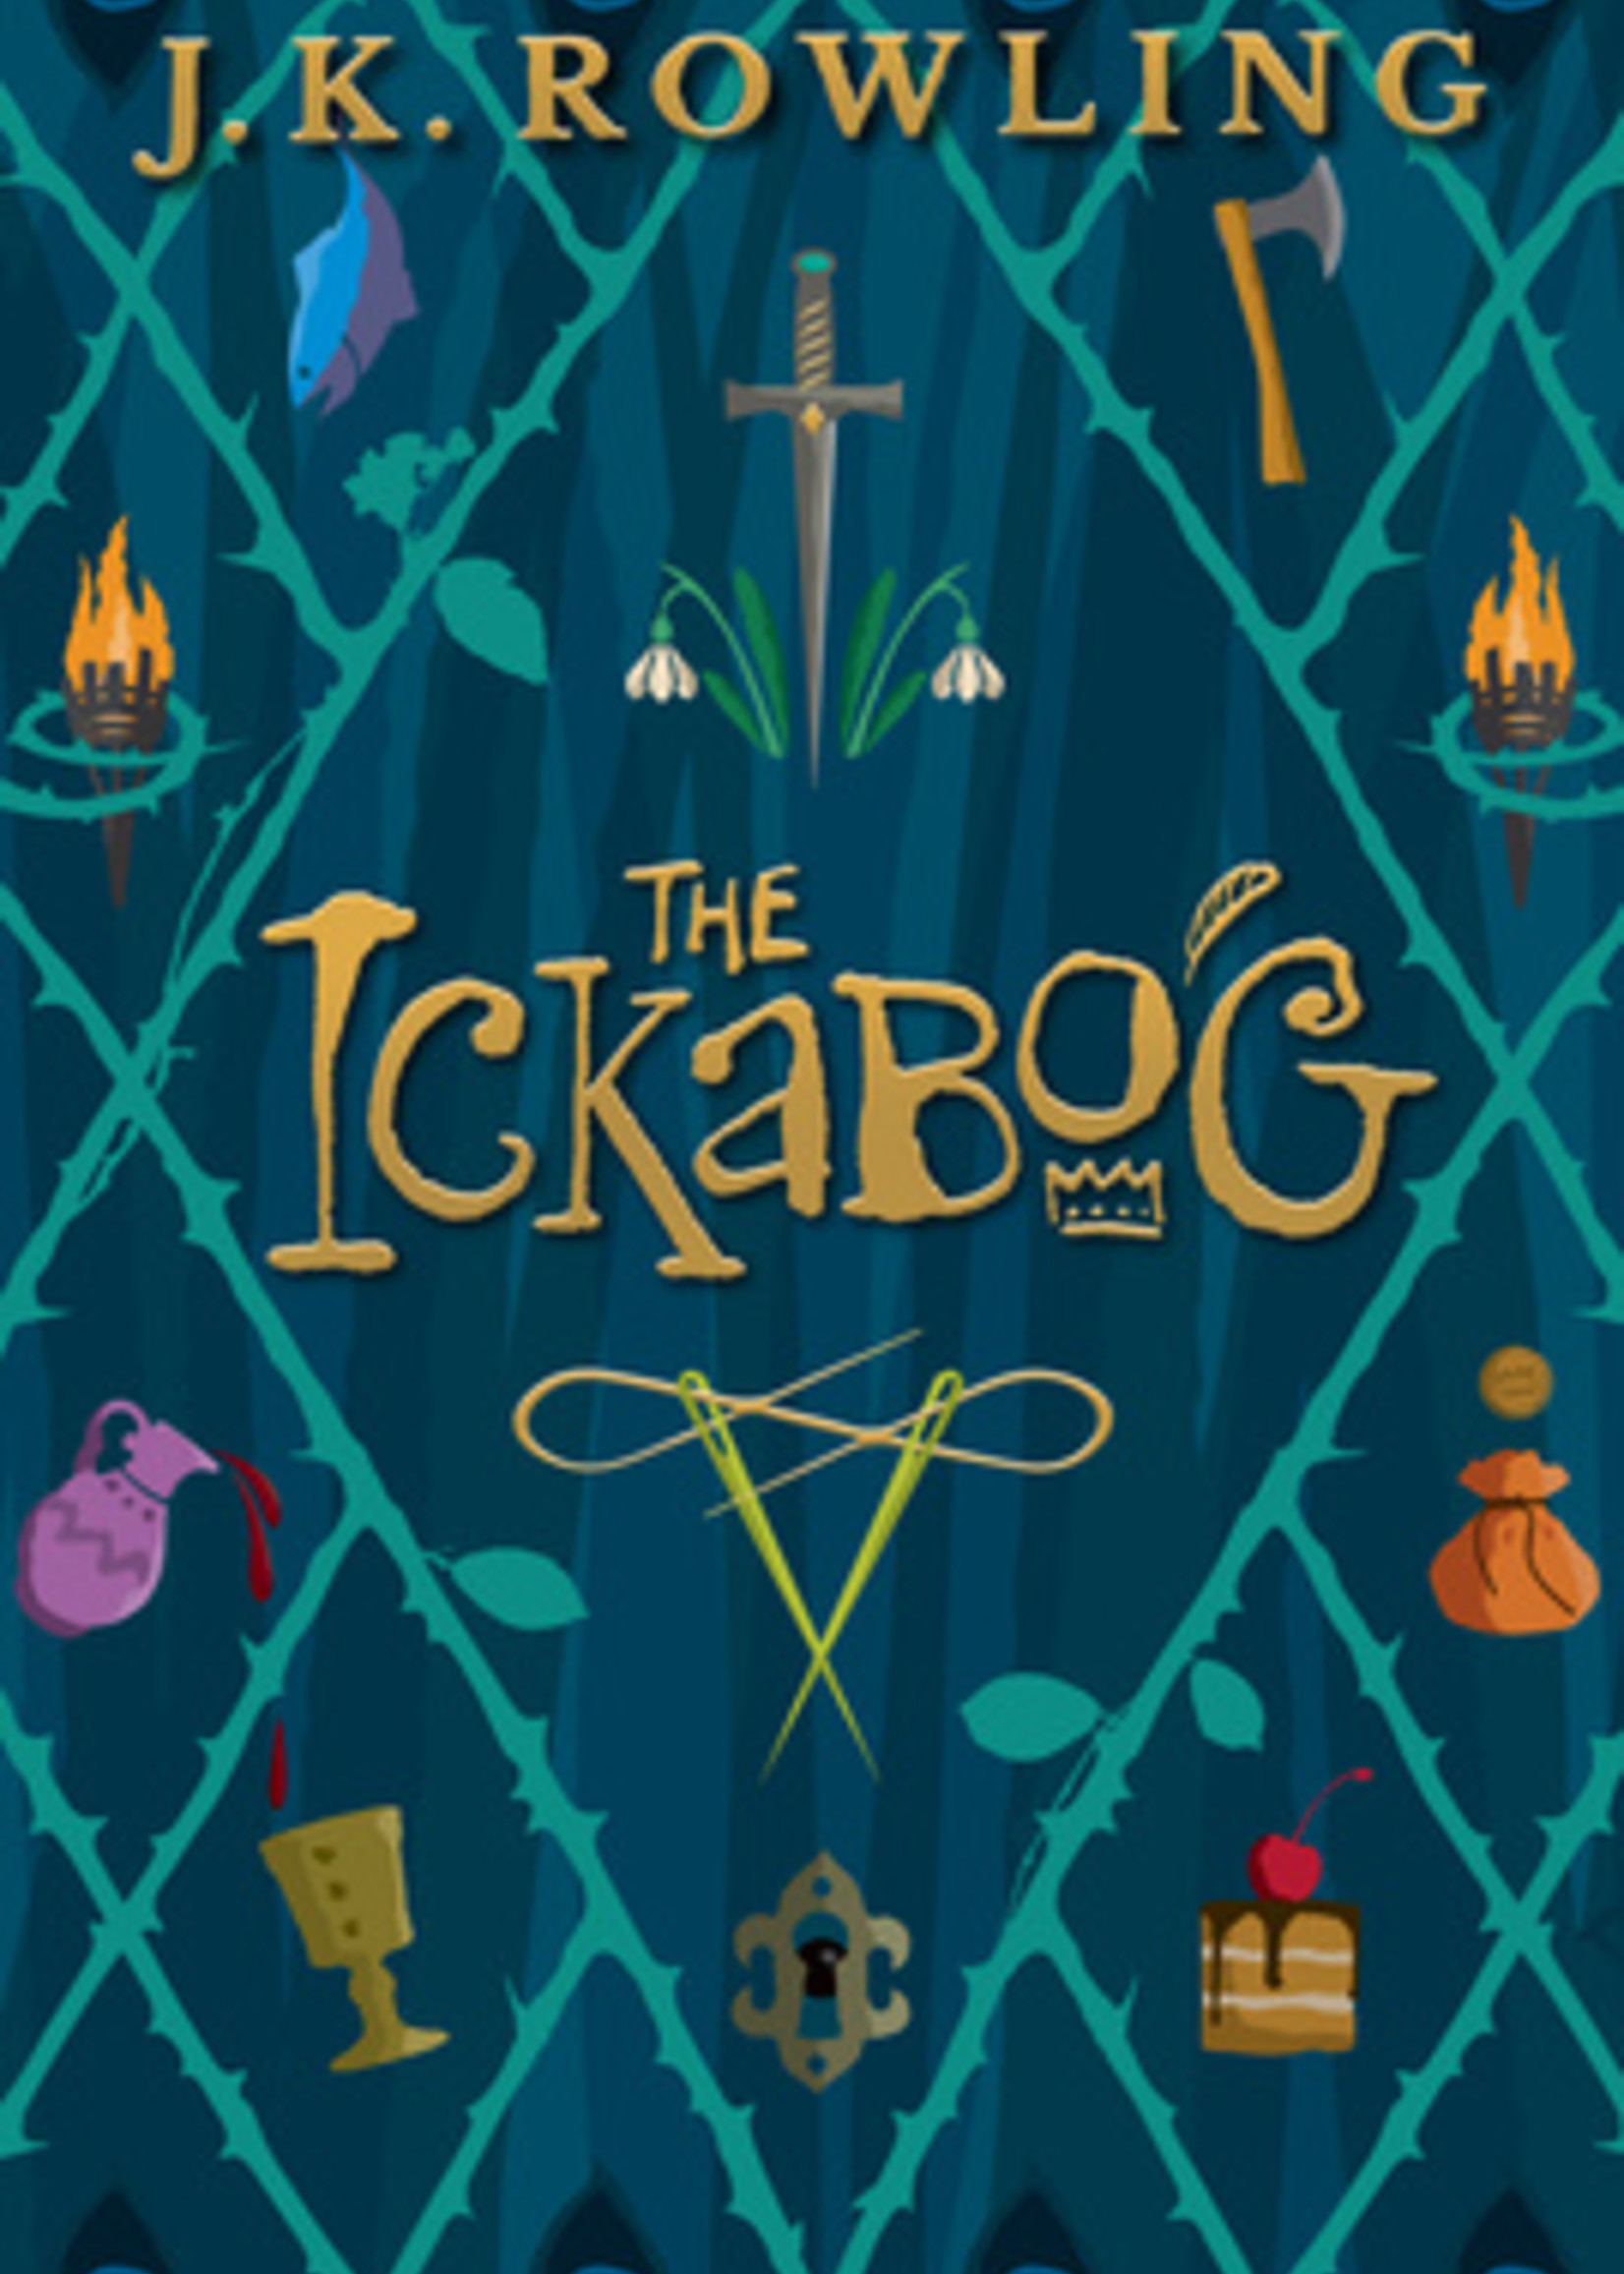 The Ickabog - Hardcover